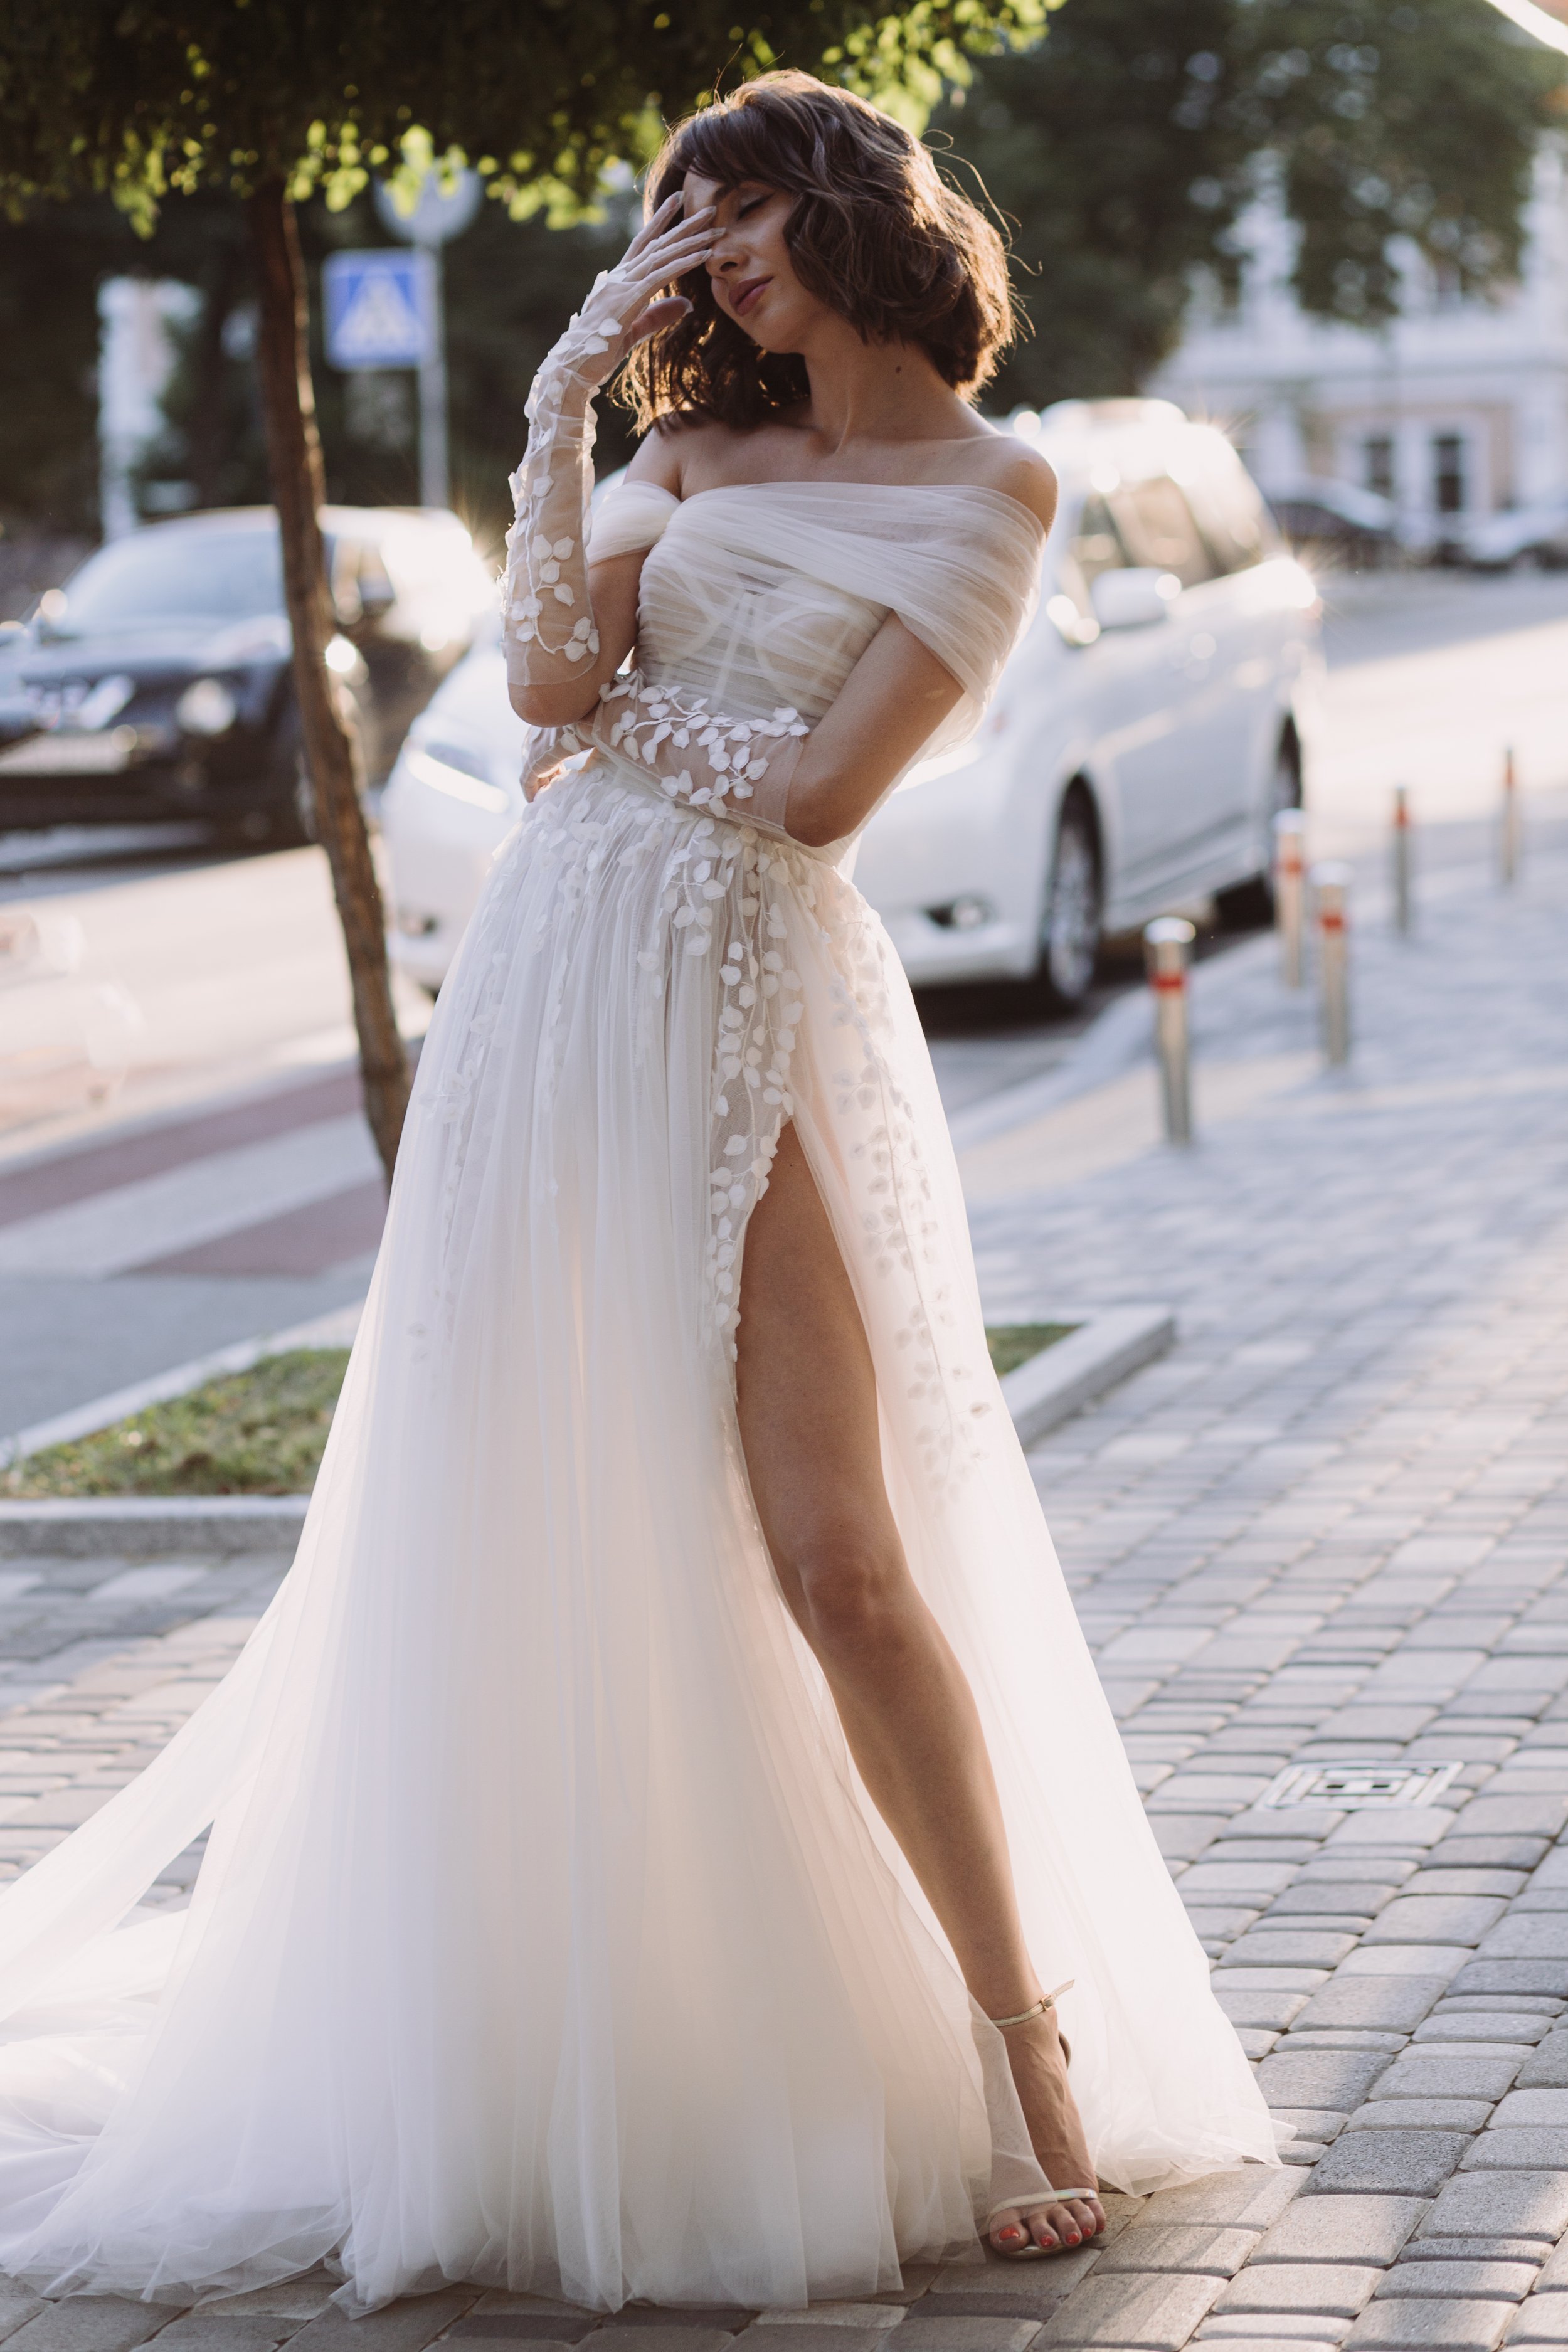 blanc-de-blanc-bridal-boutique-cleveland-dress-wedding-gown-esty-style-olive.jpg